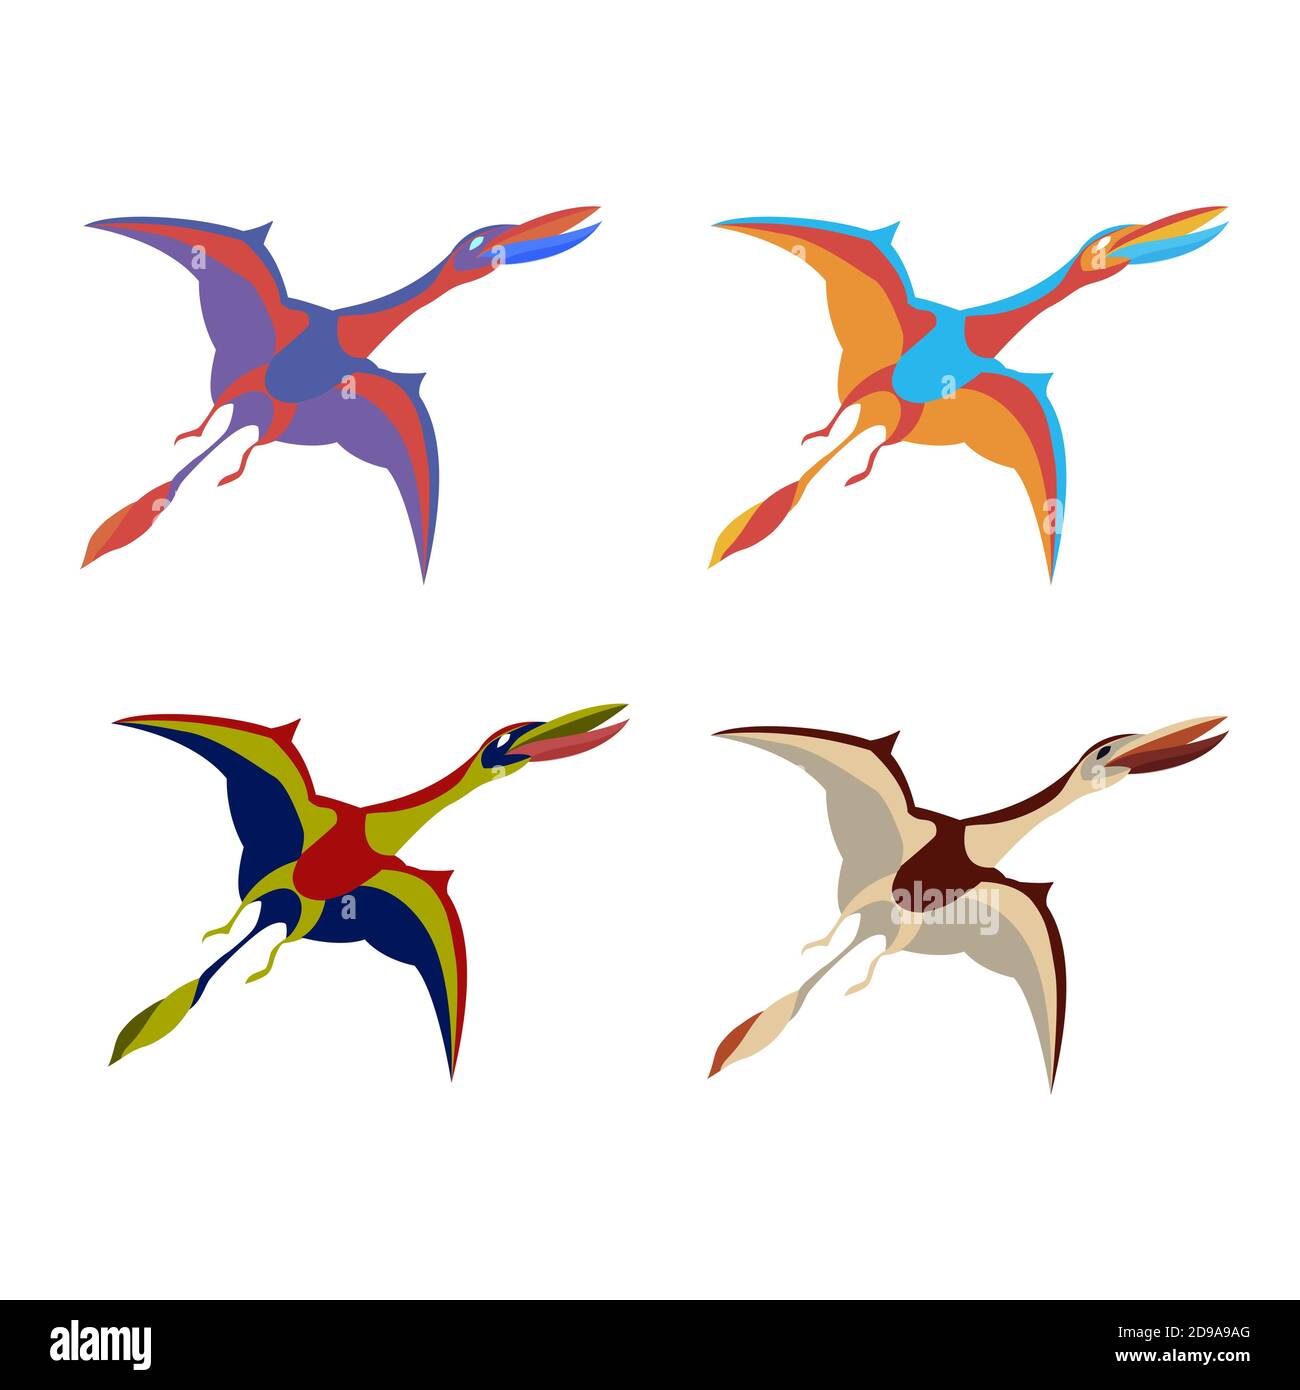 Pterodactyl or pteranodon. Flying prehistoric reptile vector illustration.  Stock Vector